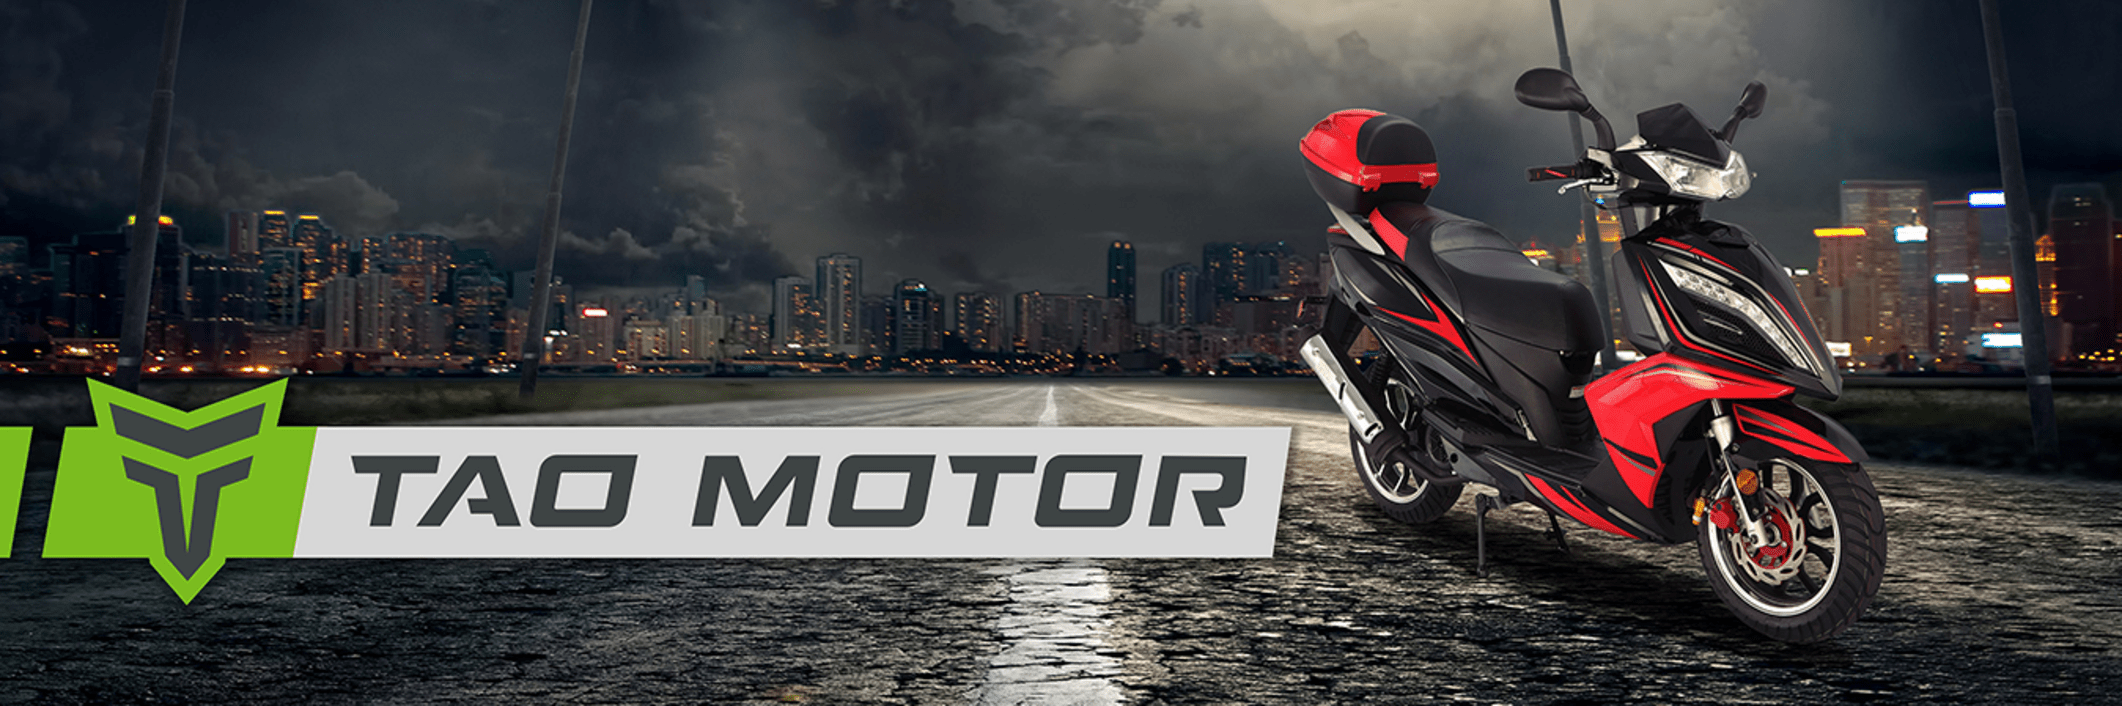 tao-motor-scooter-banner2